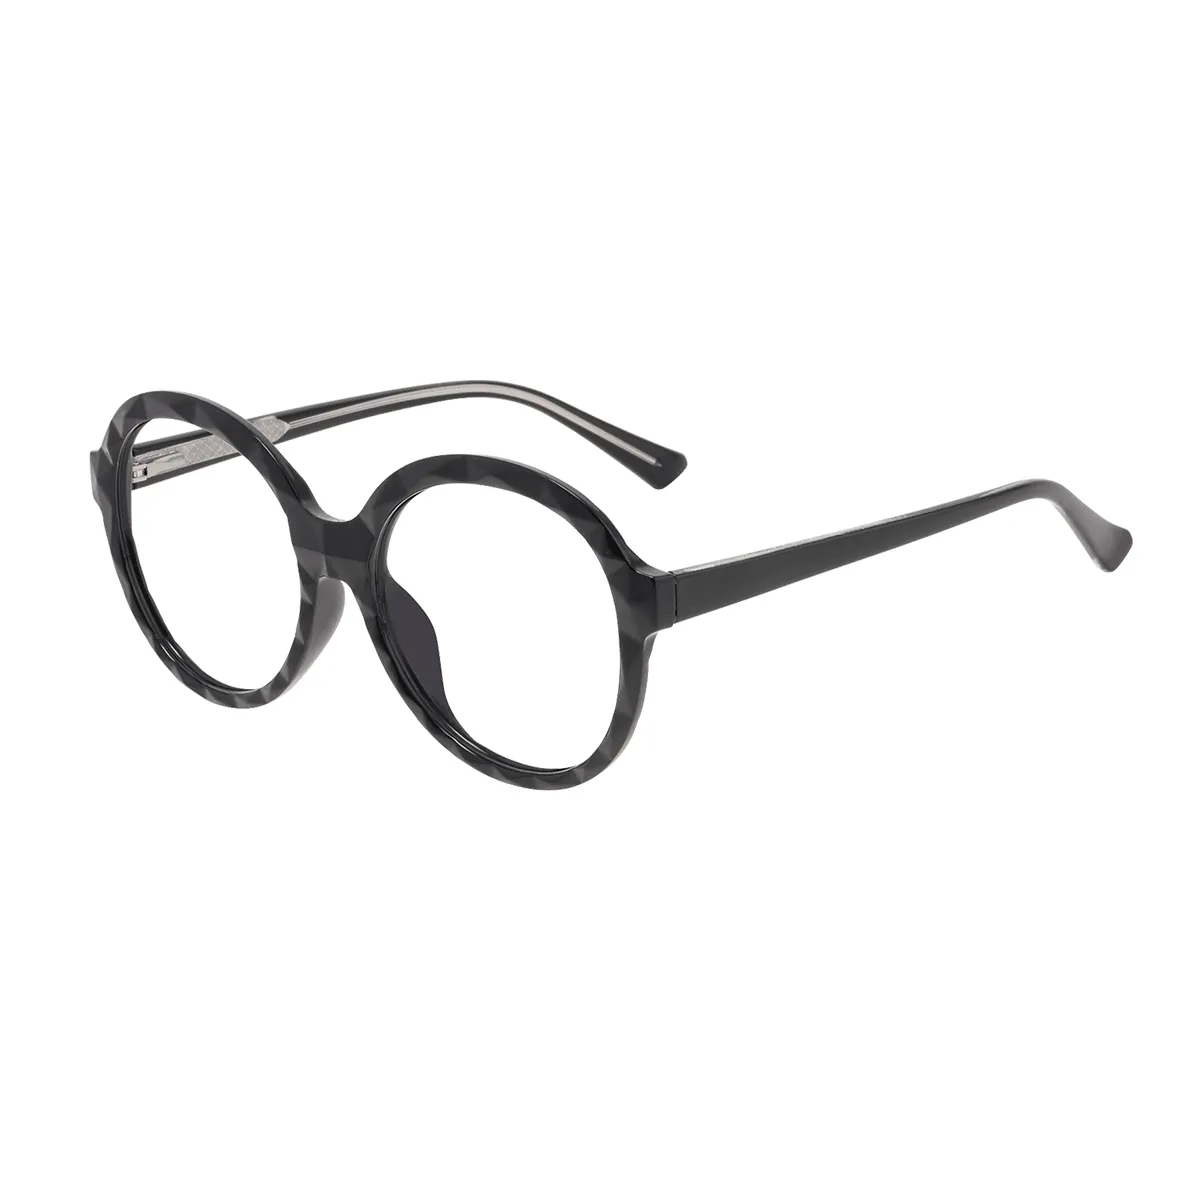 Ezra - Round Black Glasses for Women - EFE